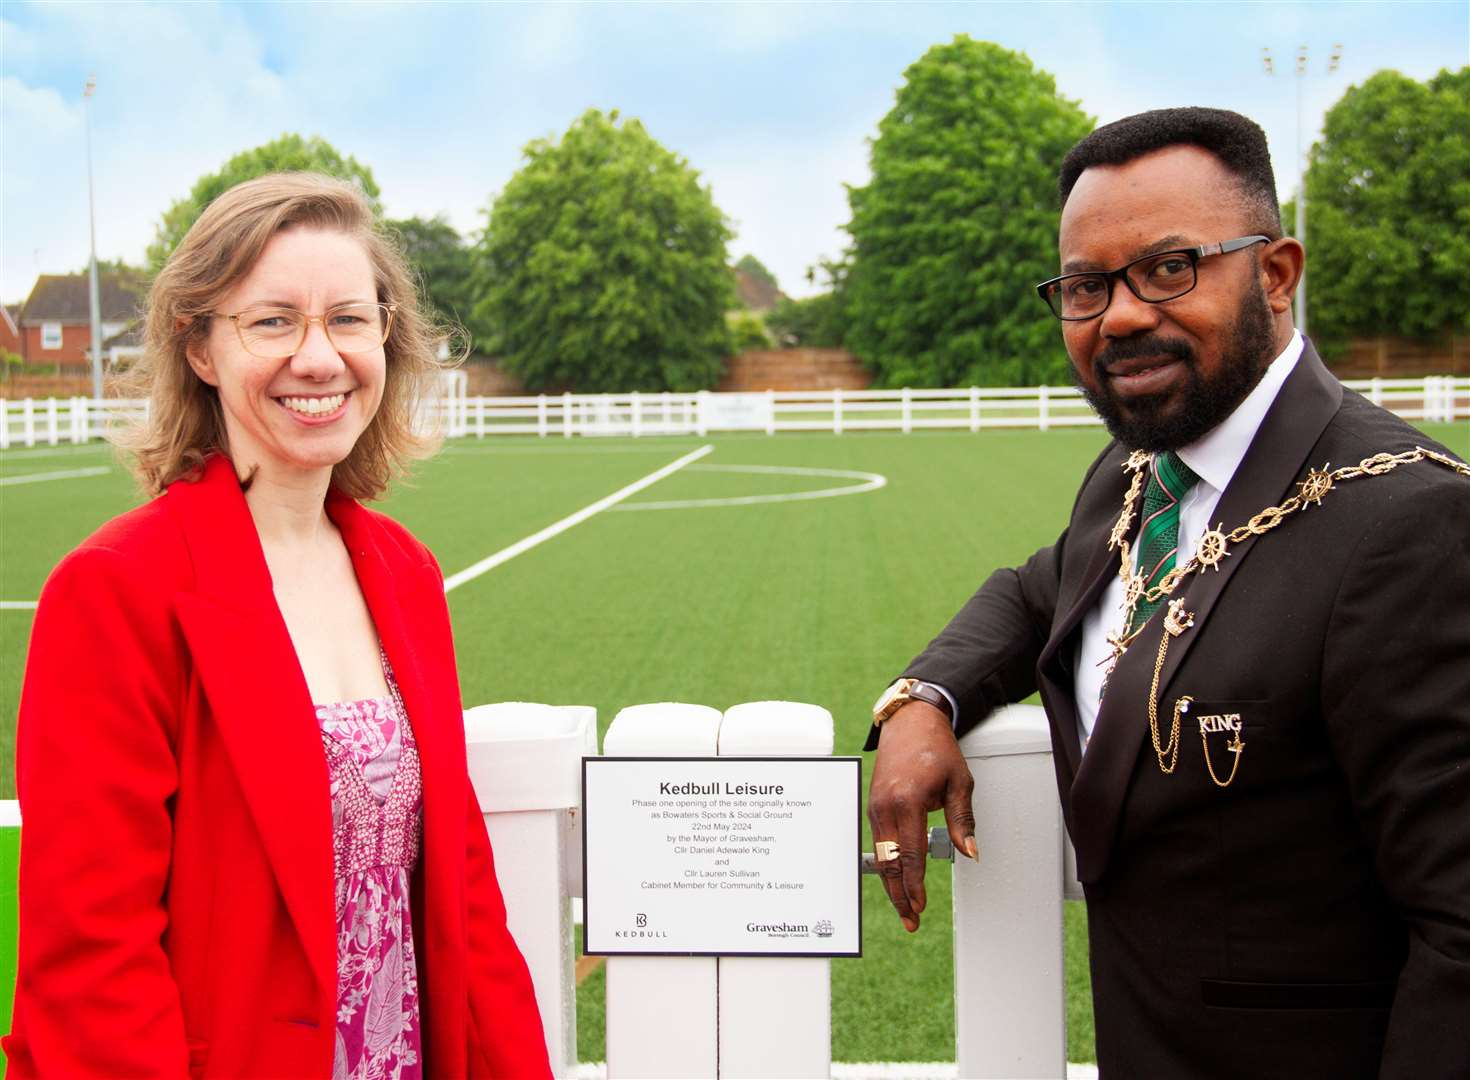 Cllr Lauren Sullivan and the Mayor of Gravesham Cllr Daniel Adewale King at the new facilities in Northfleet. Picture: Courtney Charlton